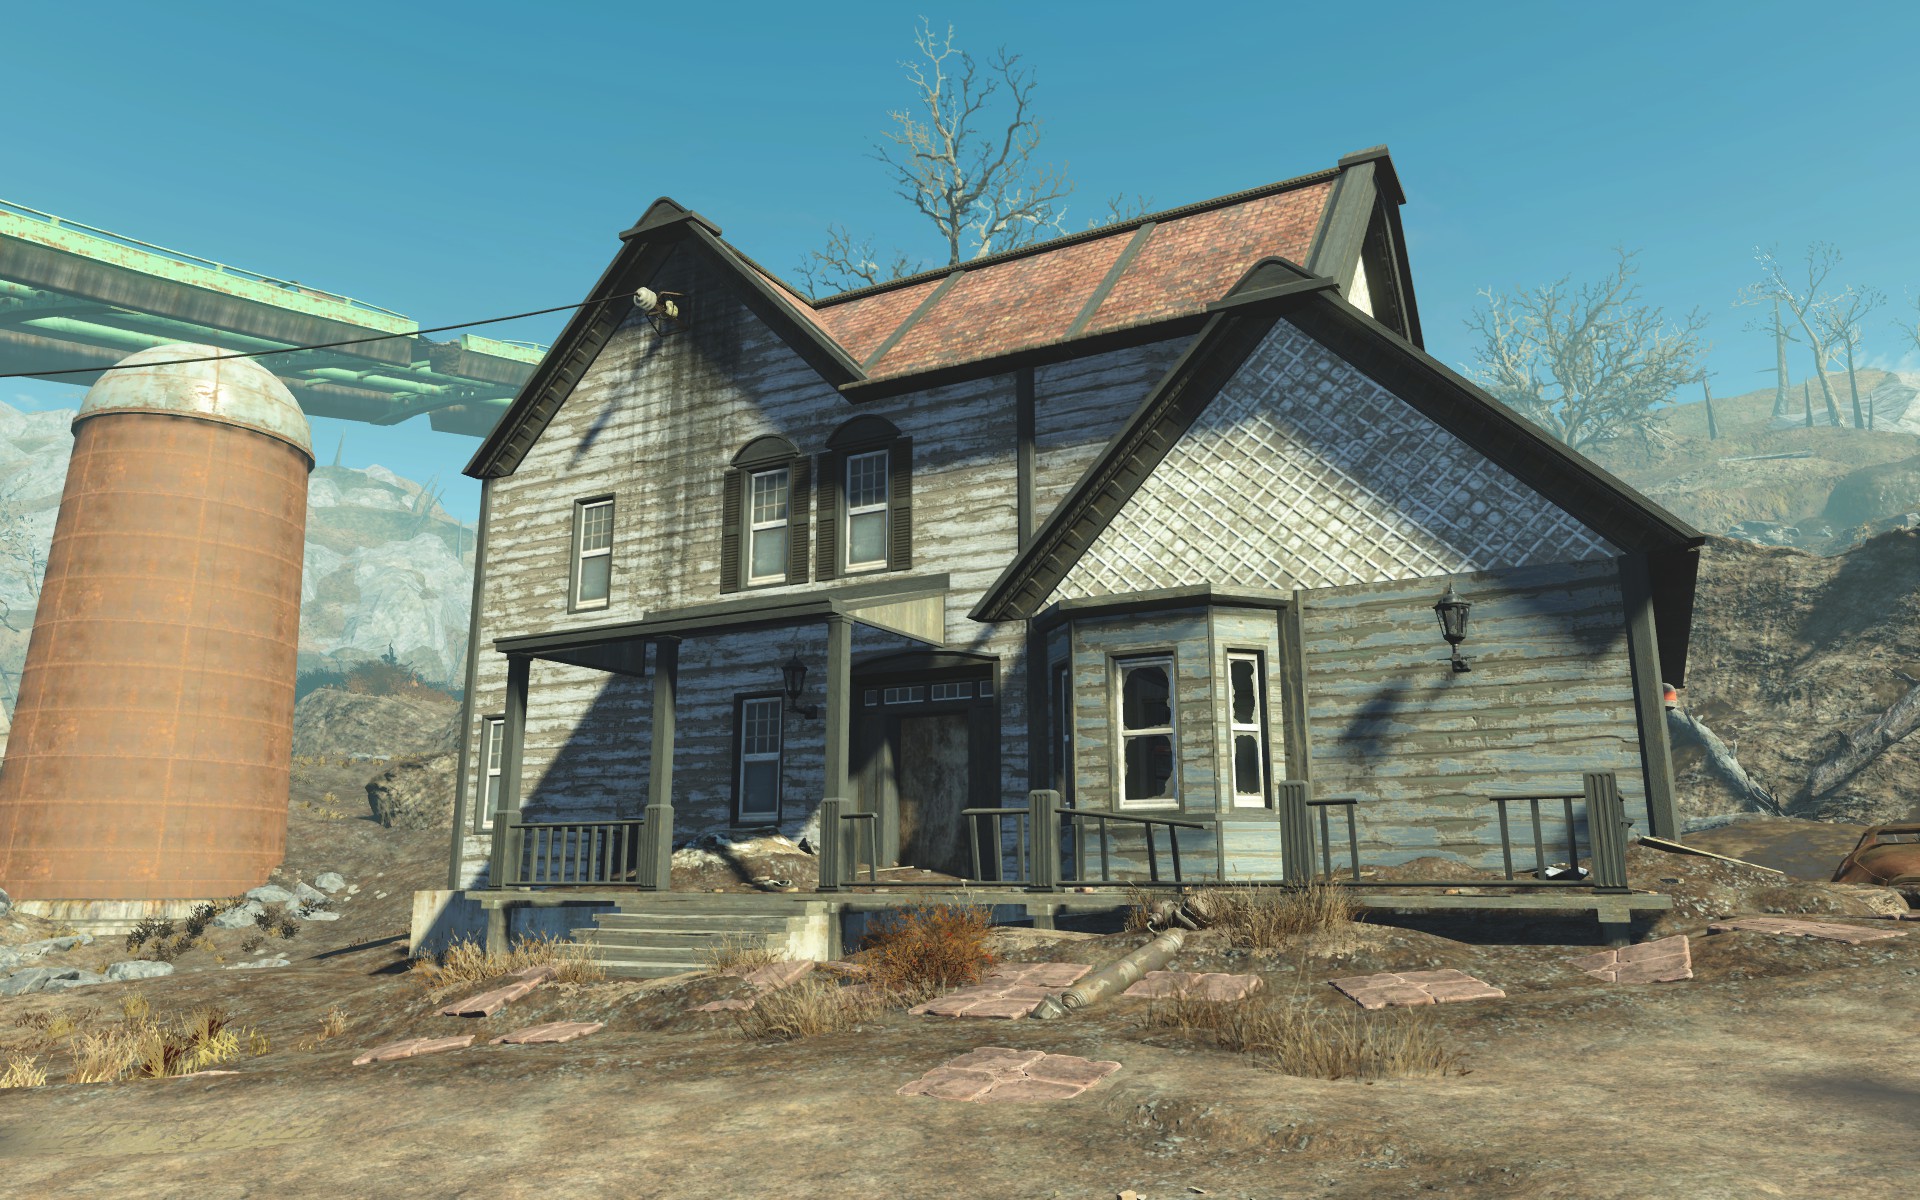 Fallout 4 player character housing, Fallout Wiki